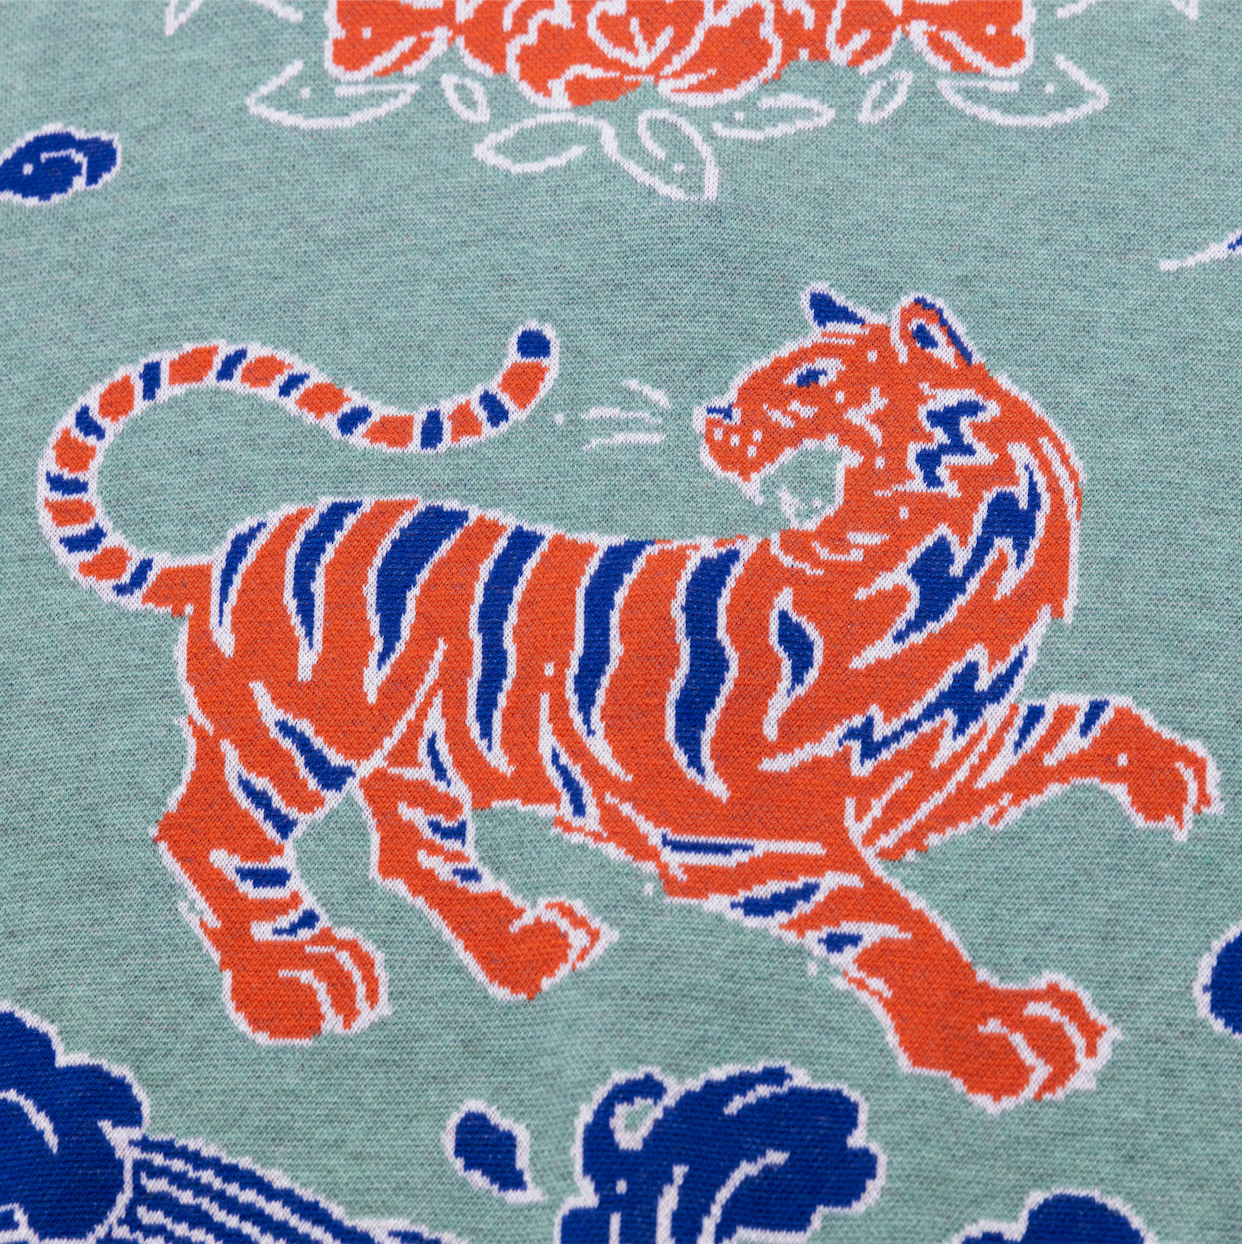 Angora Blend Tiger Intarsia Sweater